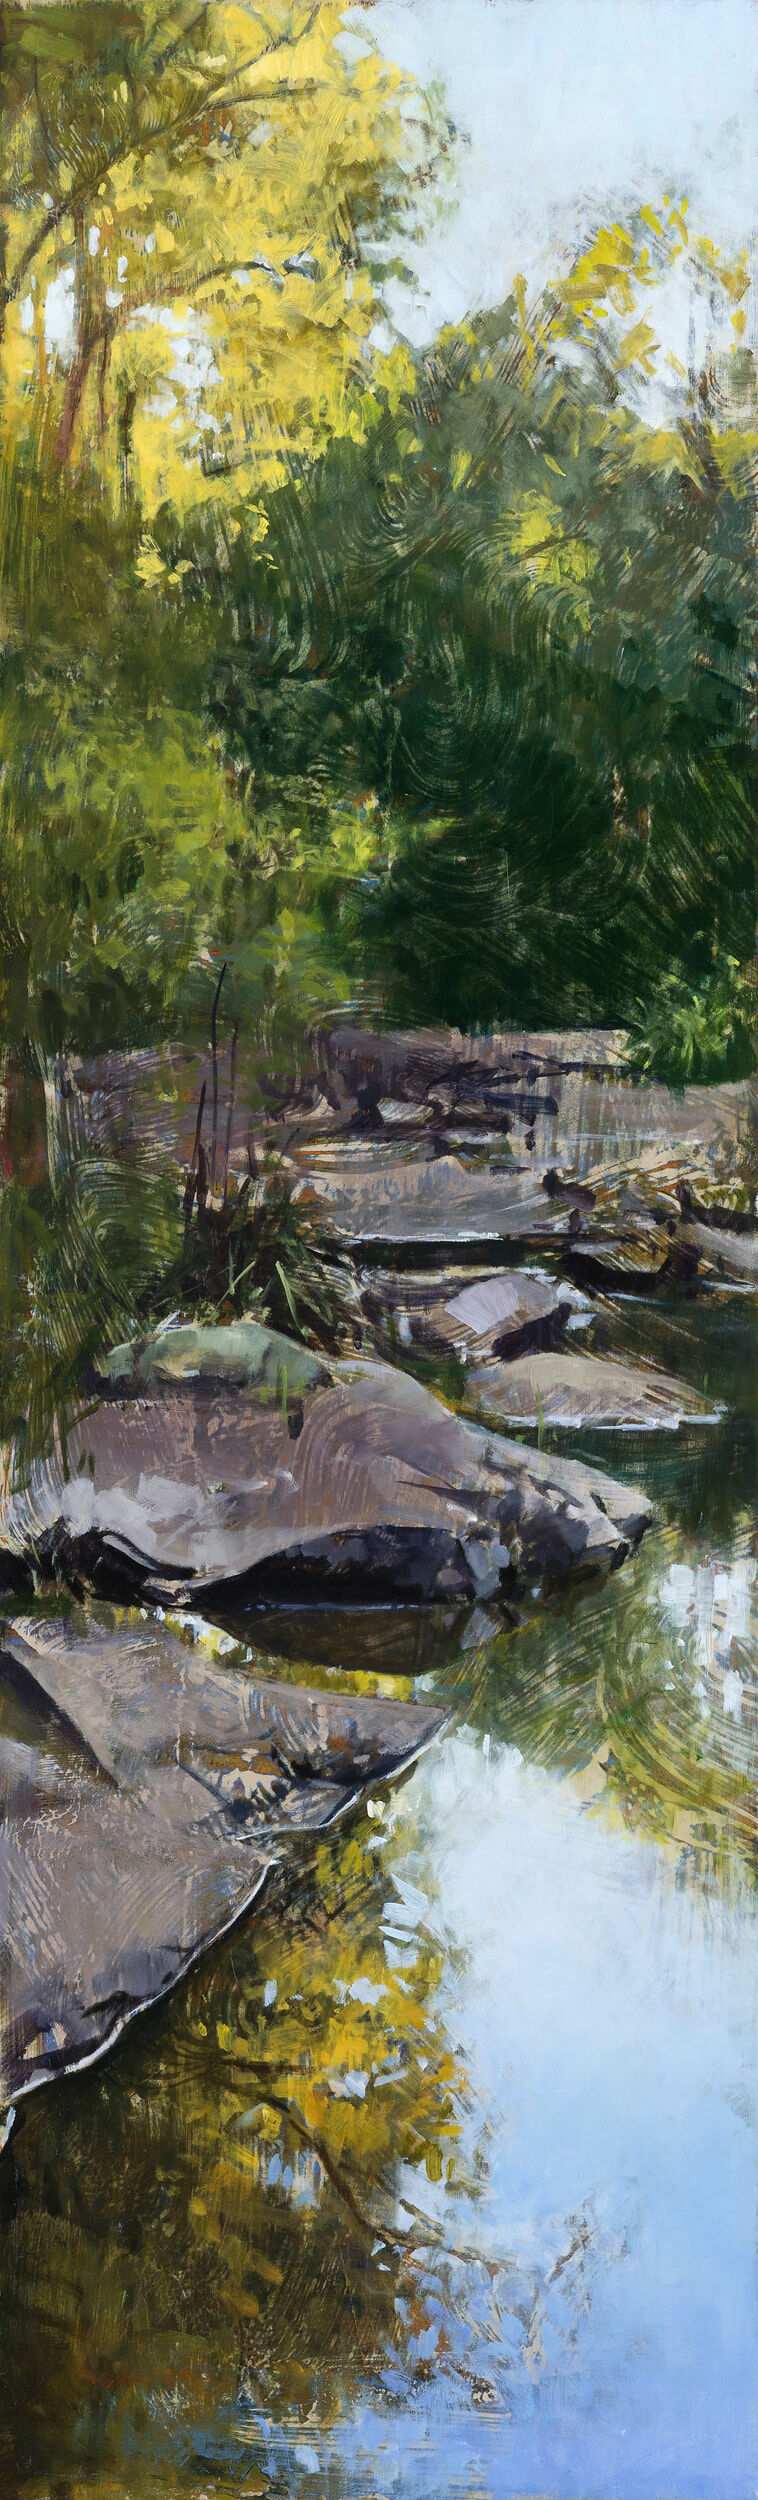 AJ Taylor, Afternoon Reflection, Rocky Creek, 2020, oil on board, 80 x 24 cm